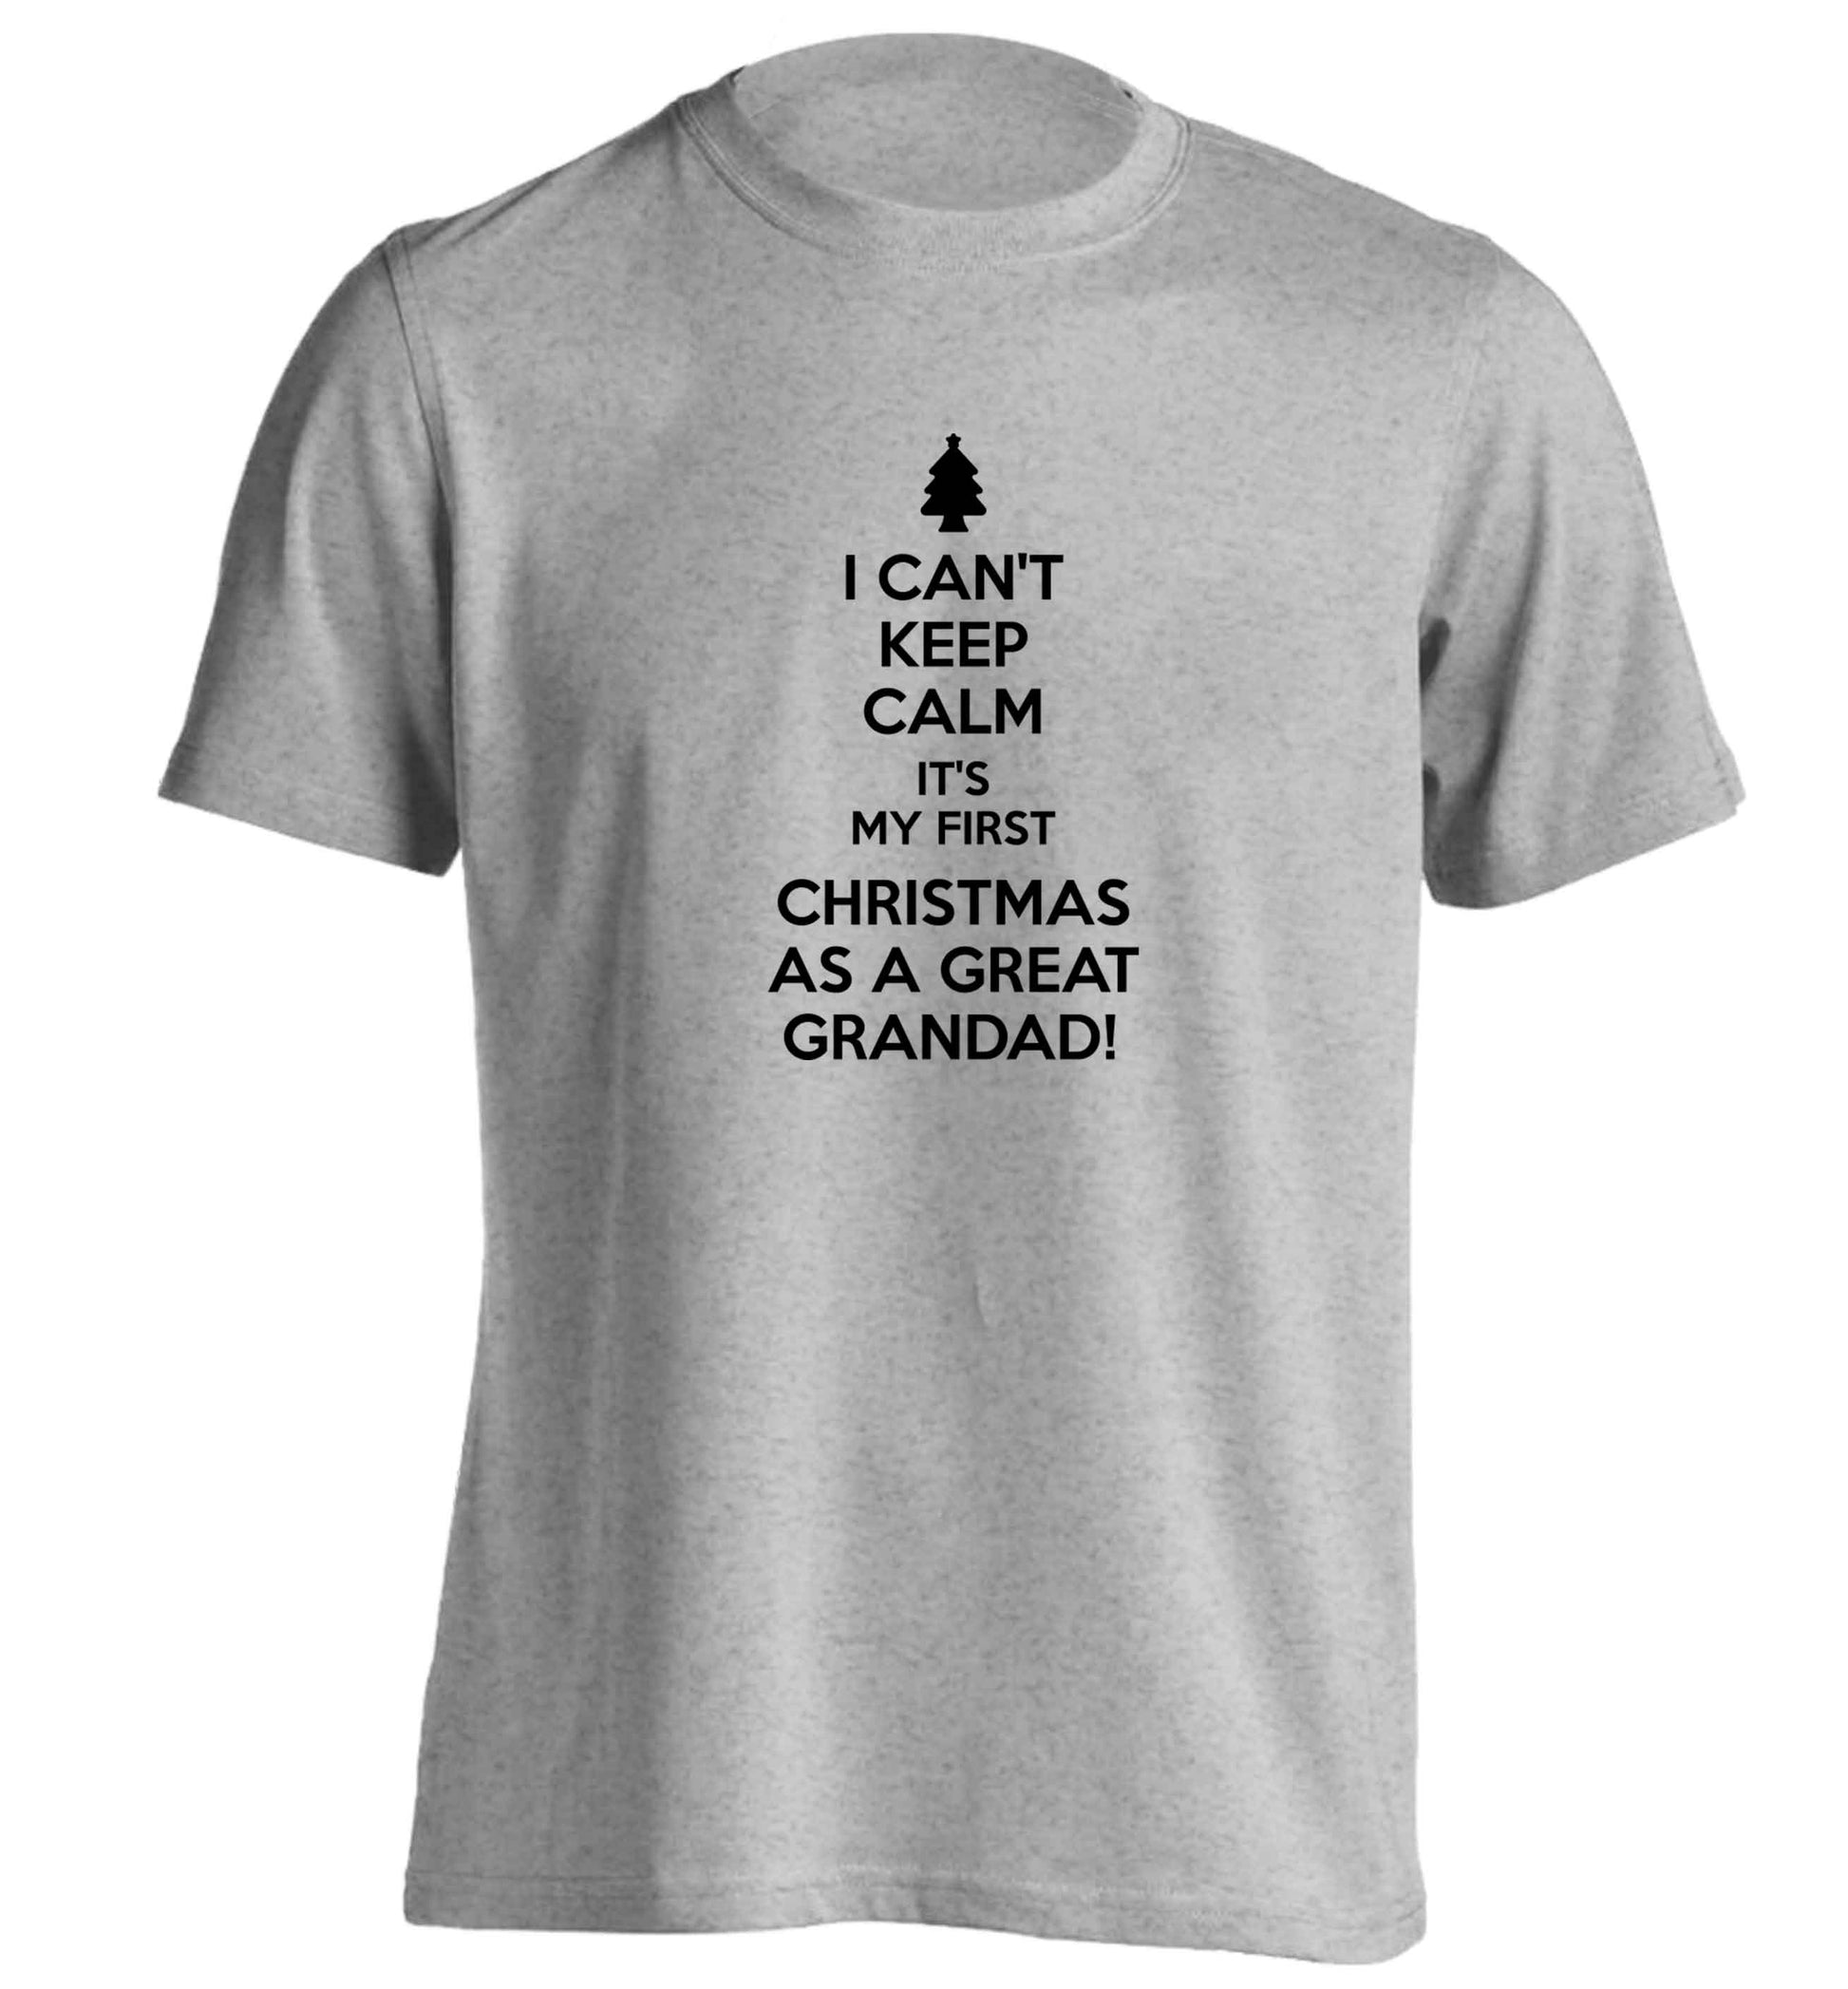 I can't keep calm it's my first Christmas as a great grandad! adults unisex grey Tshirt 2XL